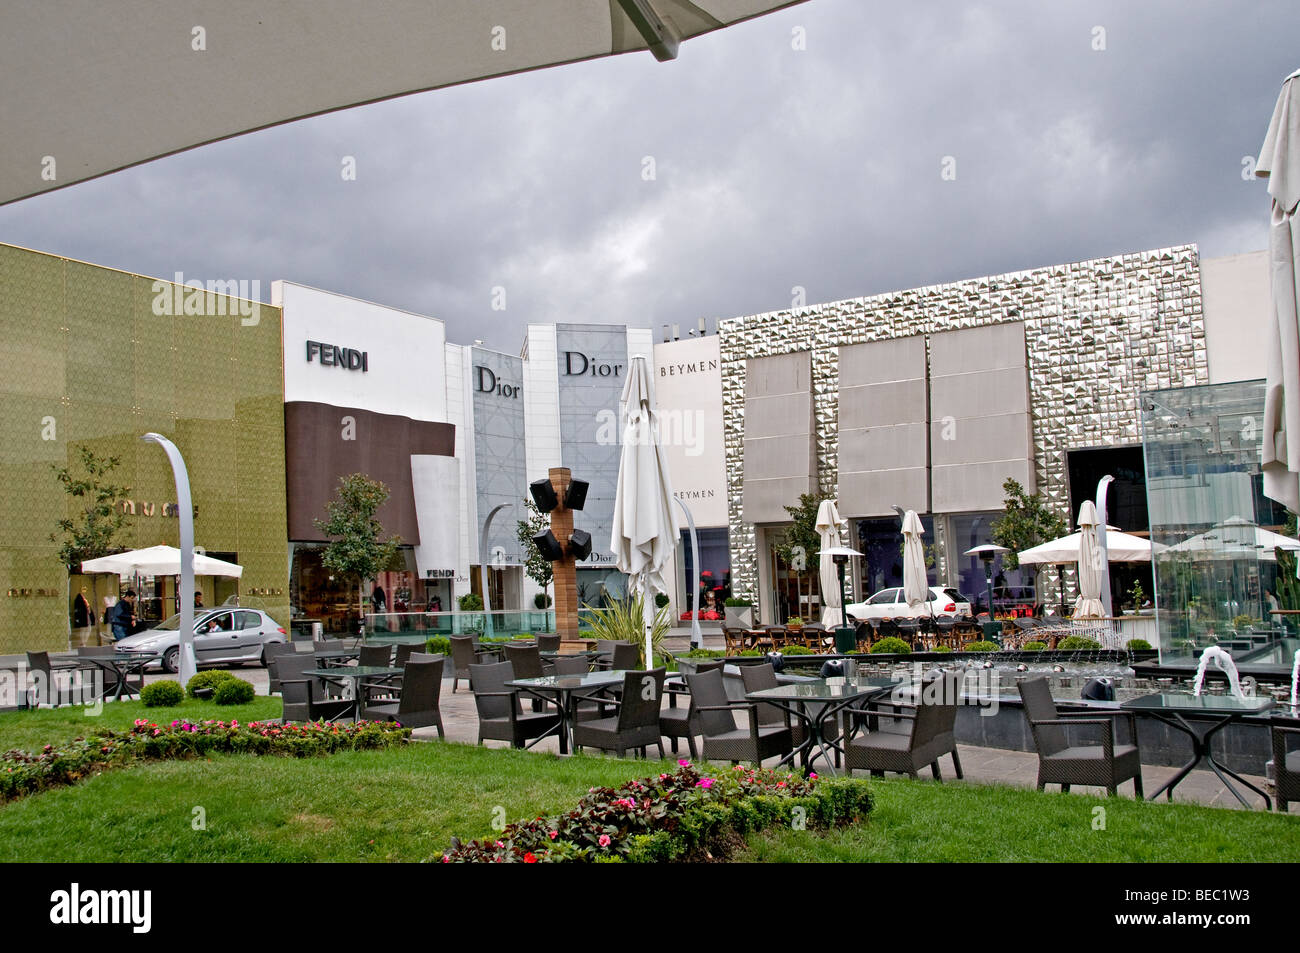 Istinye Park Shopping Mall  Layout architecture, Shopping mall